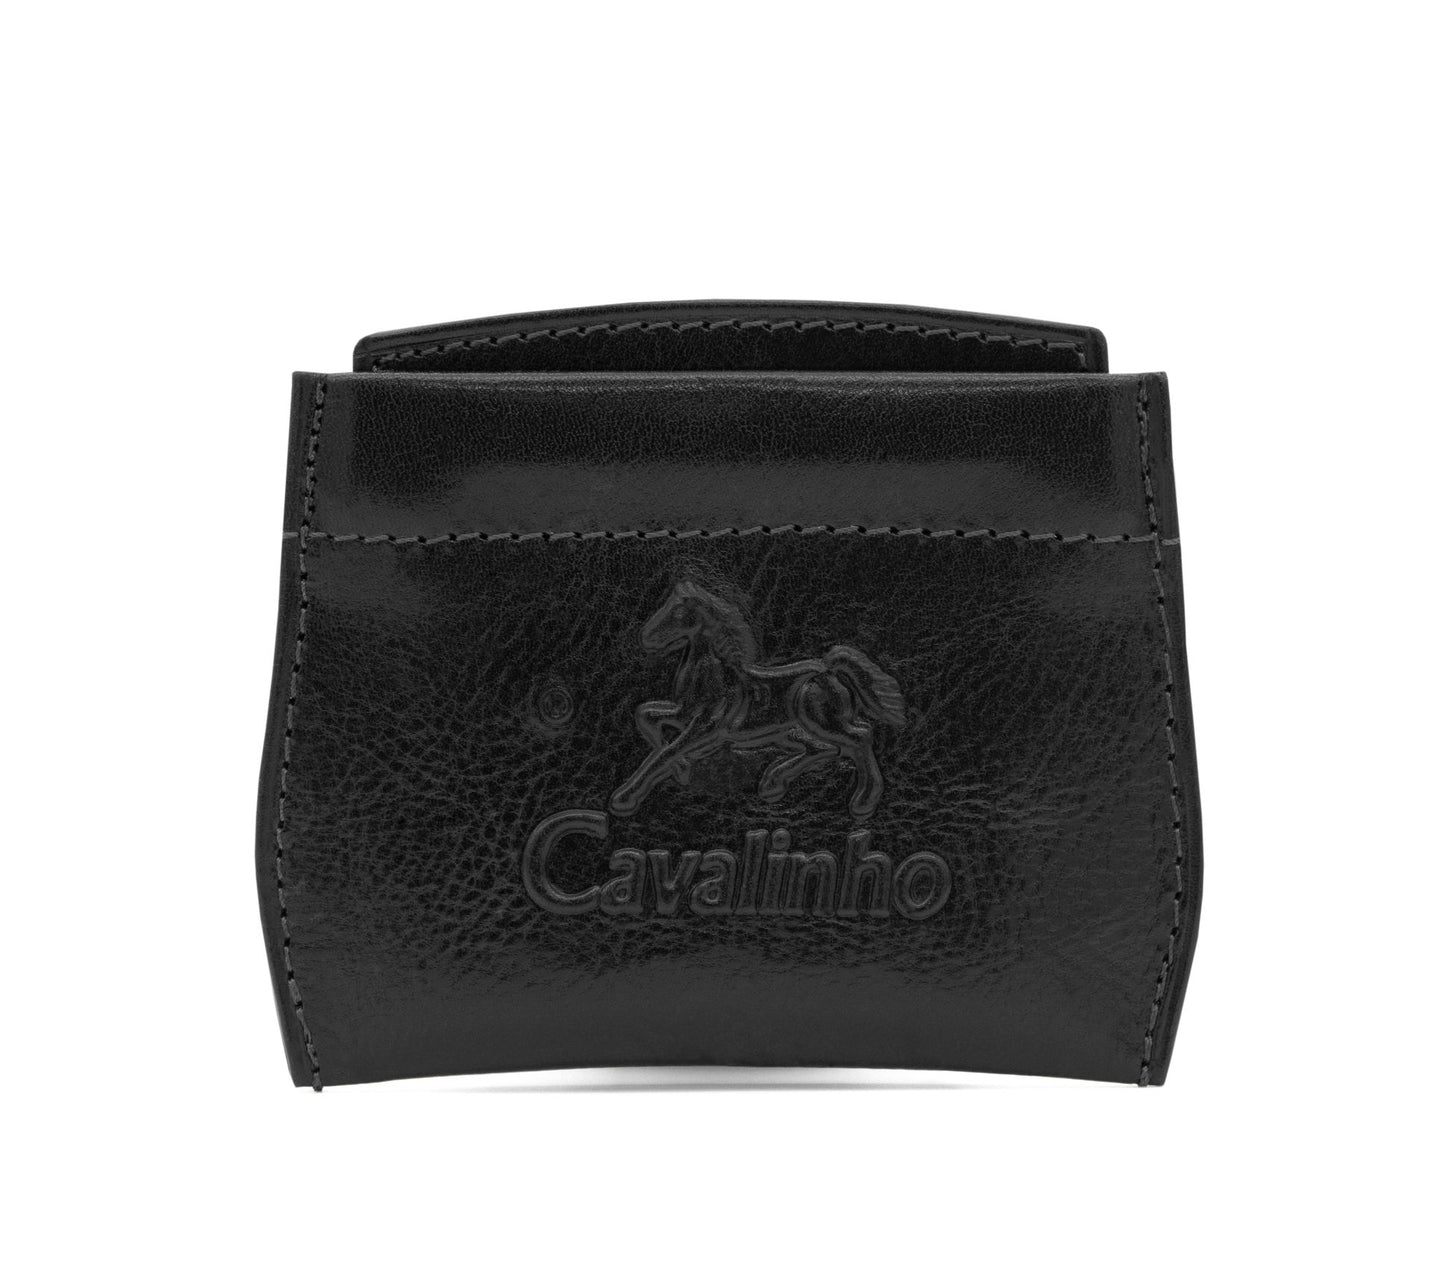 Cavalinho Leather Change Purse - Black - 28610568.01_1